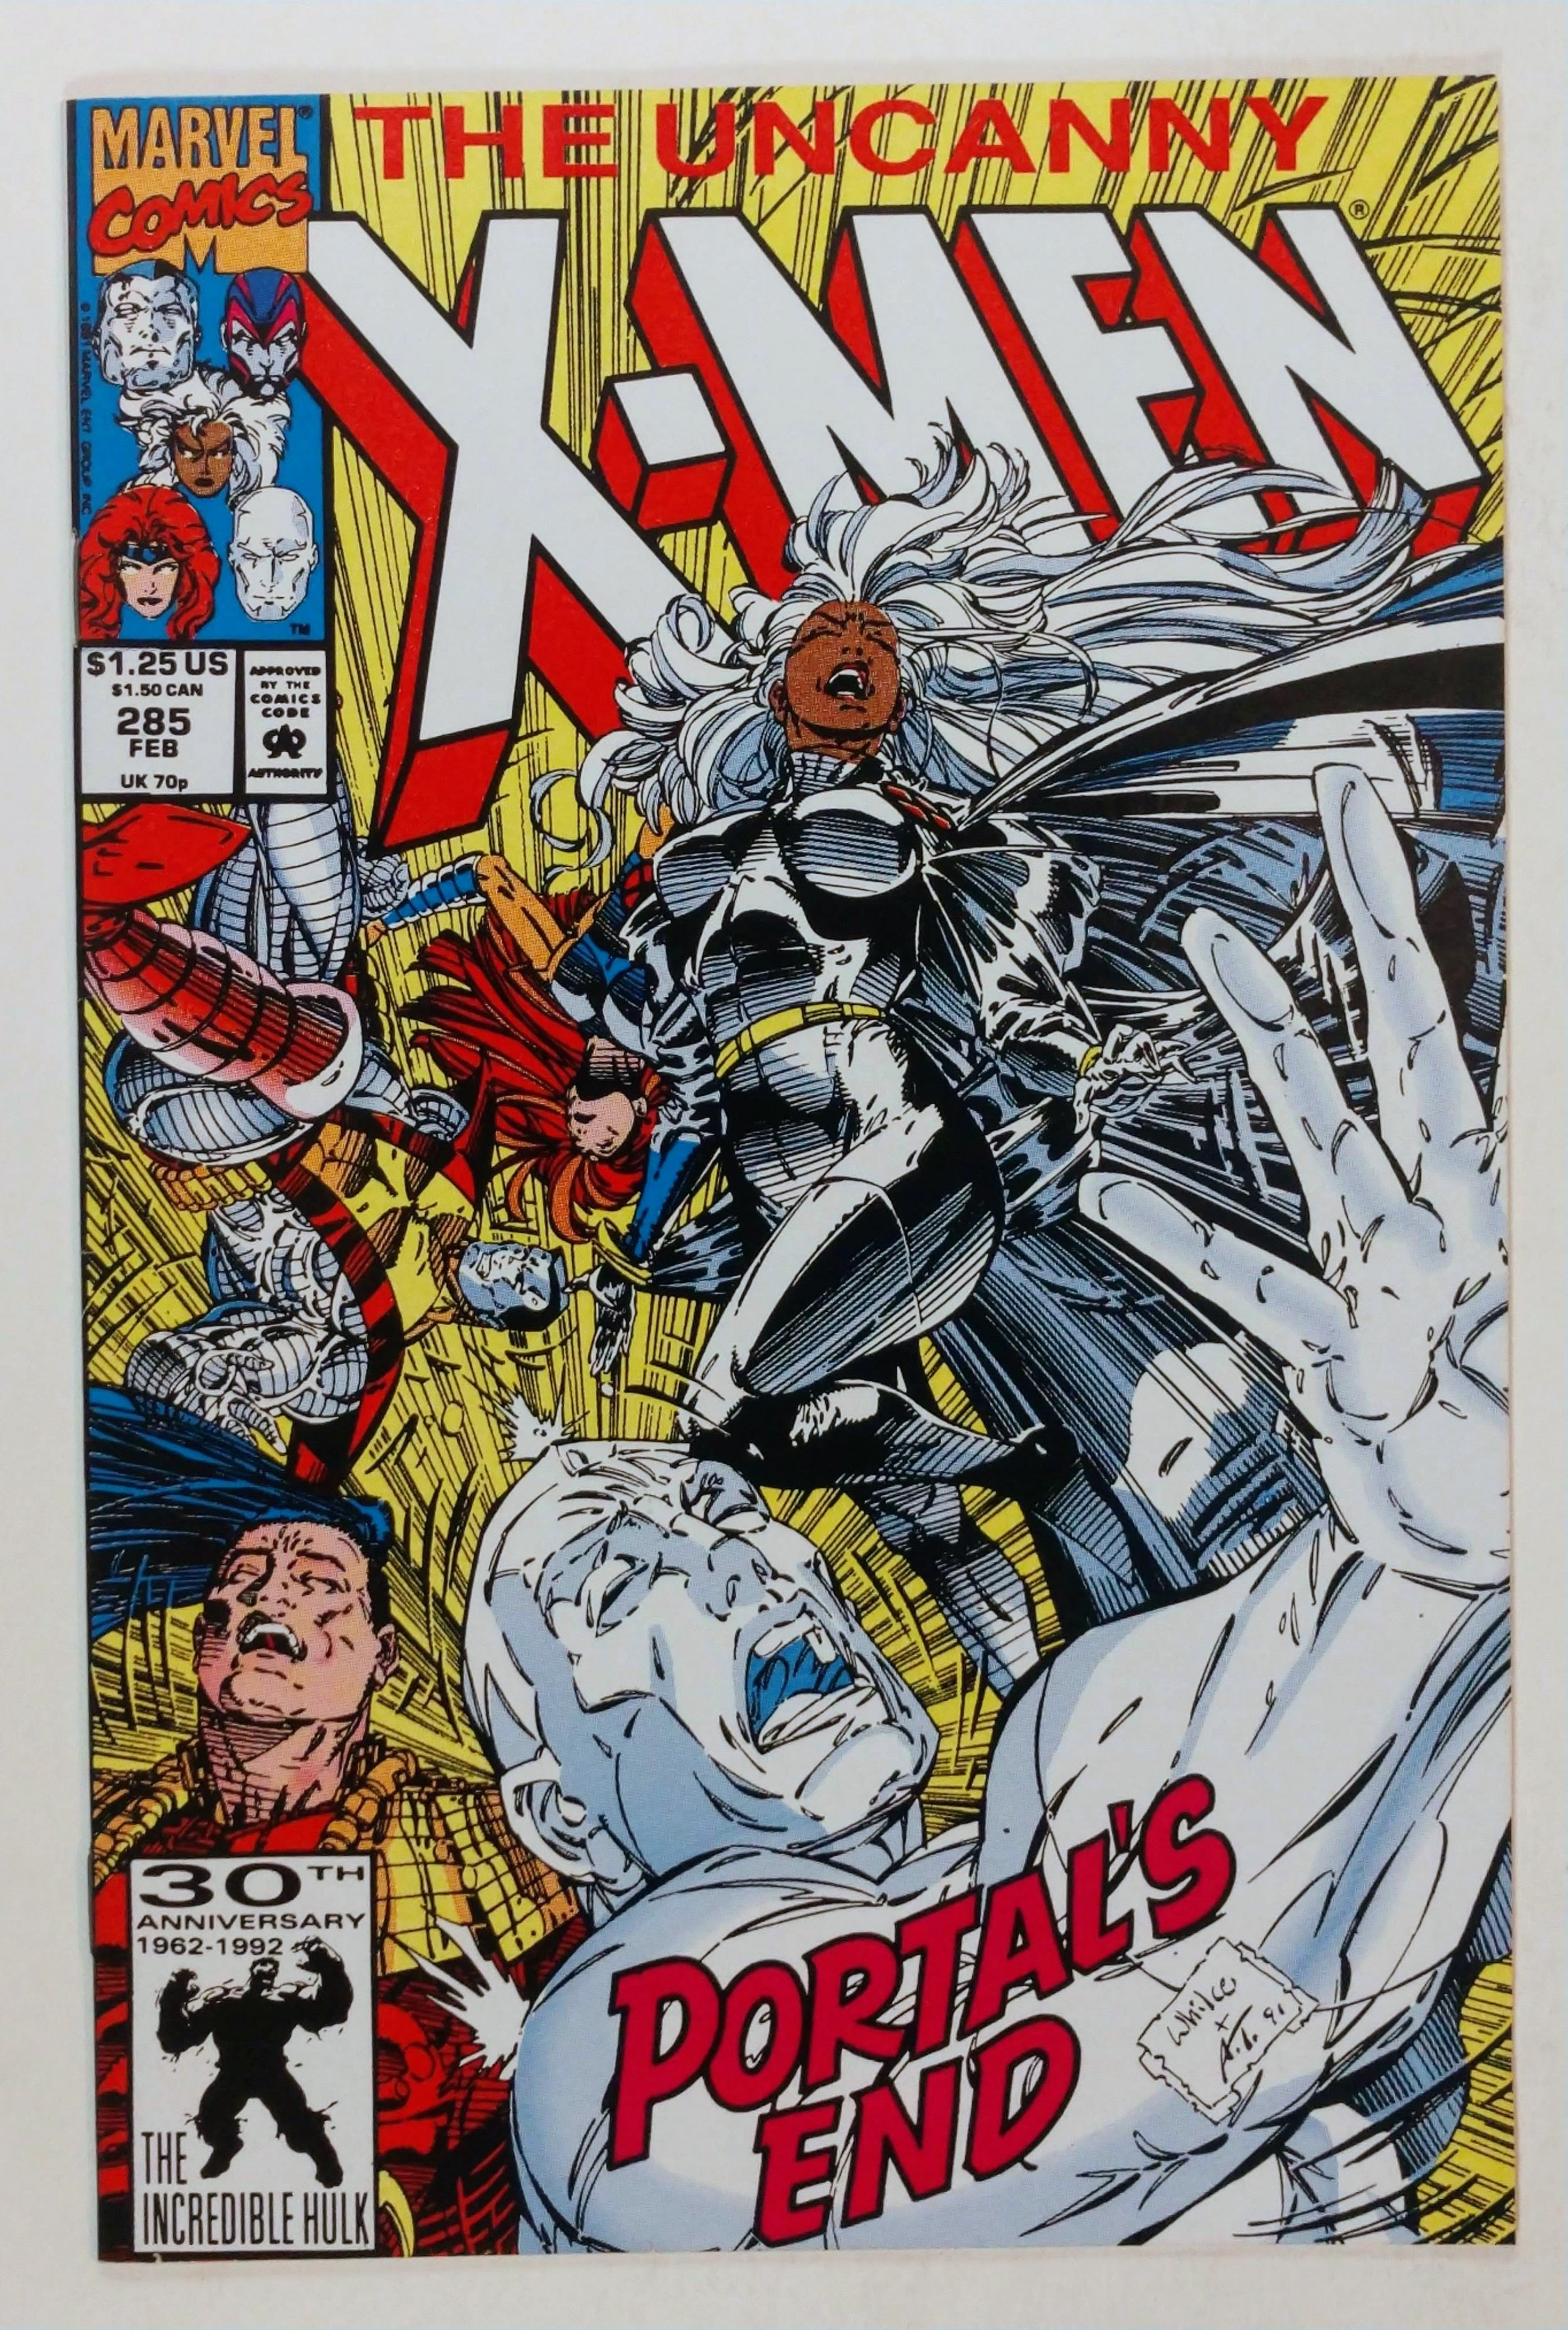 Marvel Comics Final Thoughts – X-Men: Blood of Apocalypse – RogueWatson